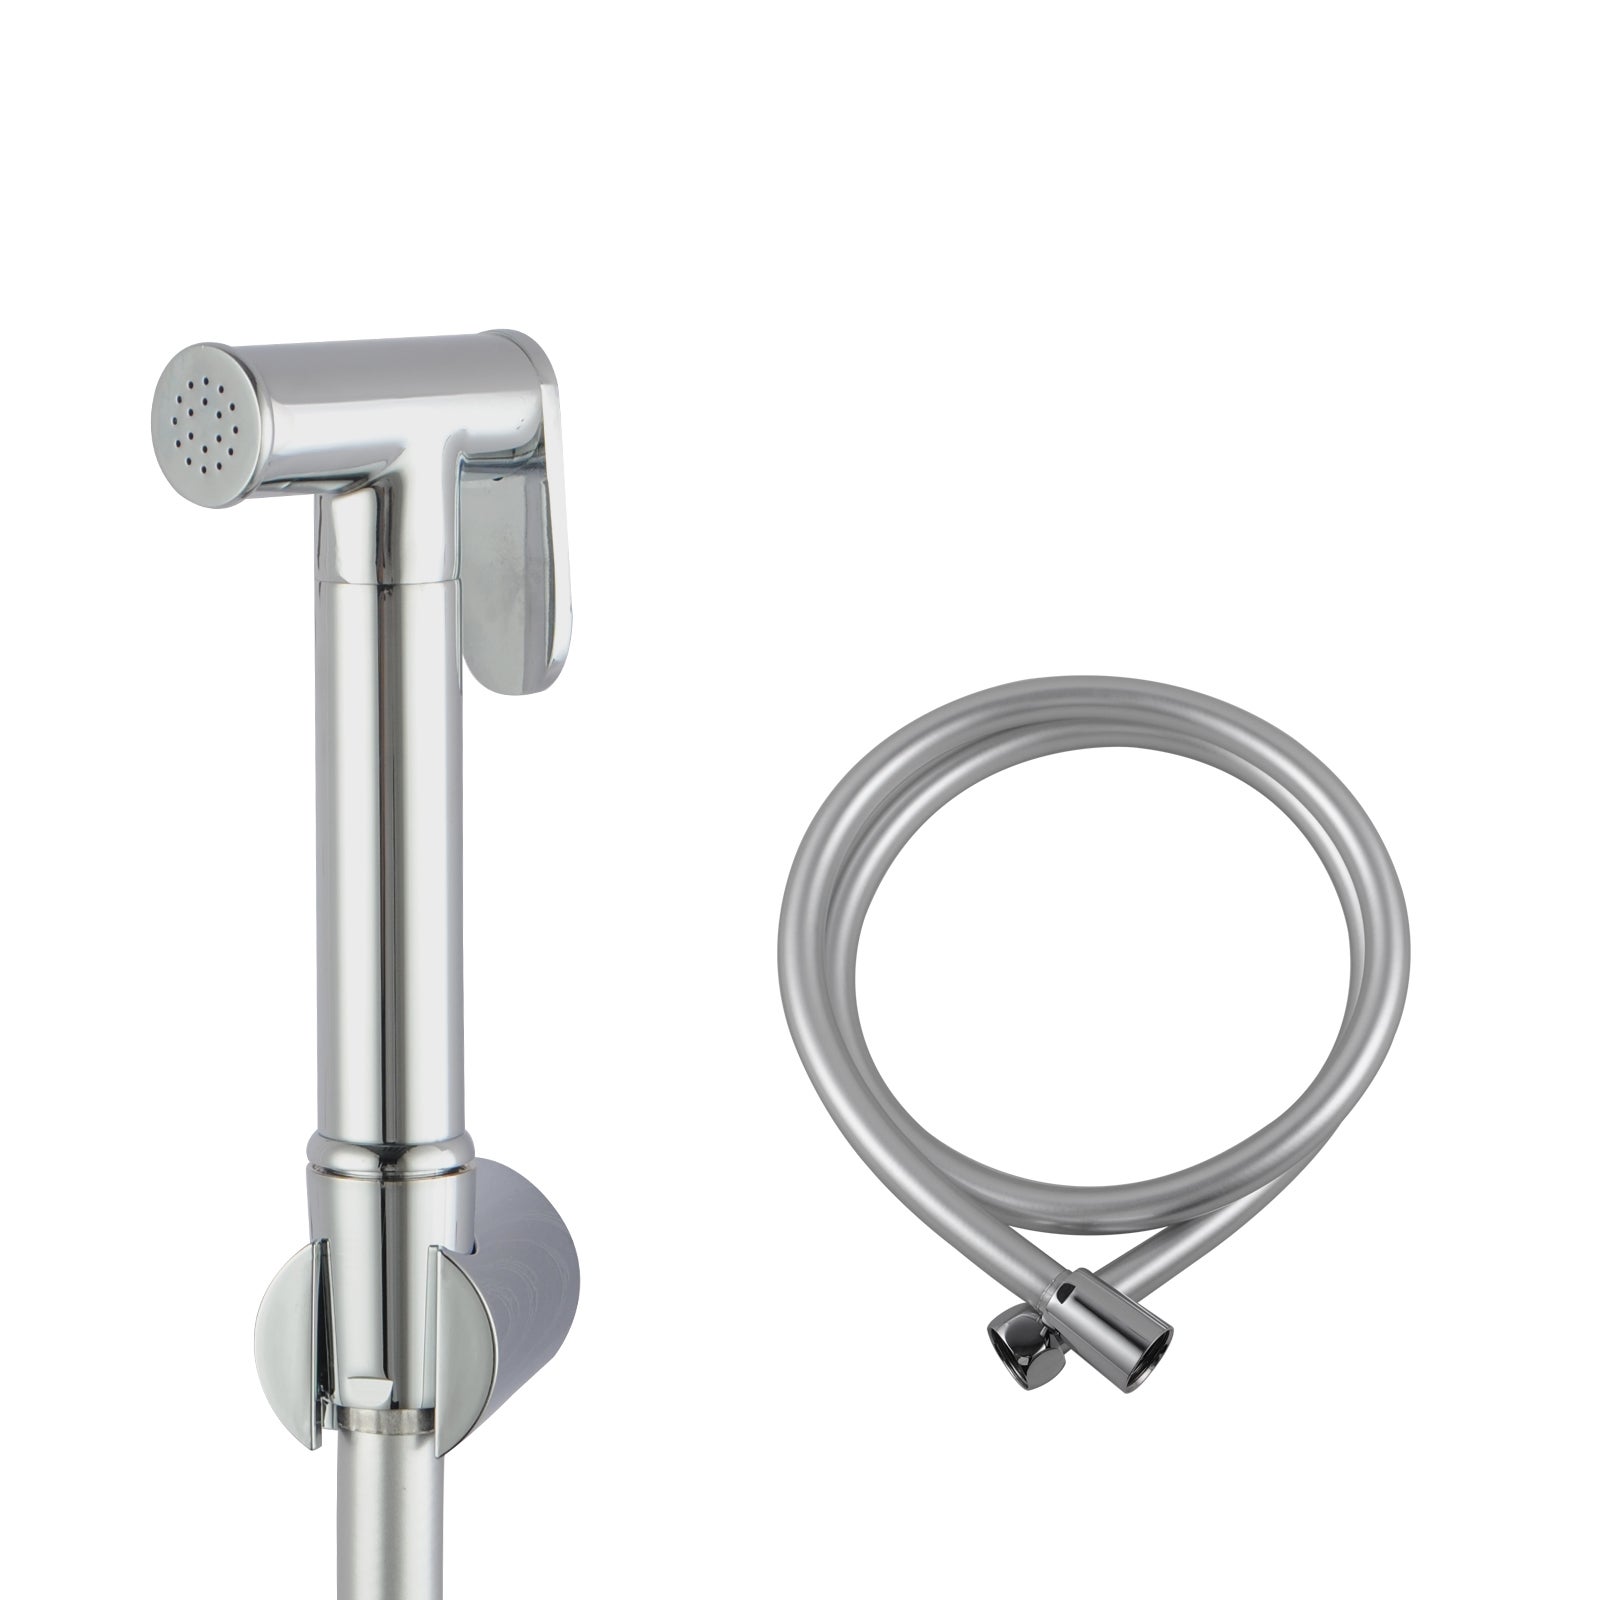 ACA Round Chrome Brass Toilet Bidet Spray Kit with 1.2m PVC Water Hose